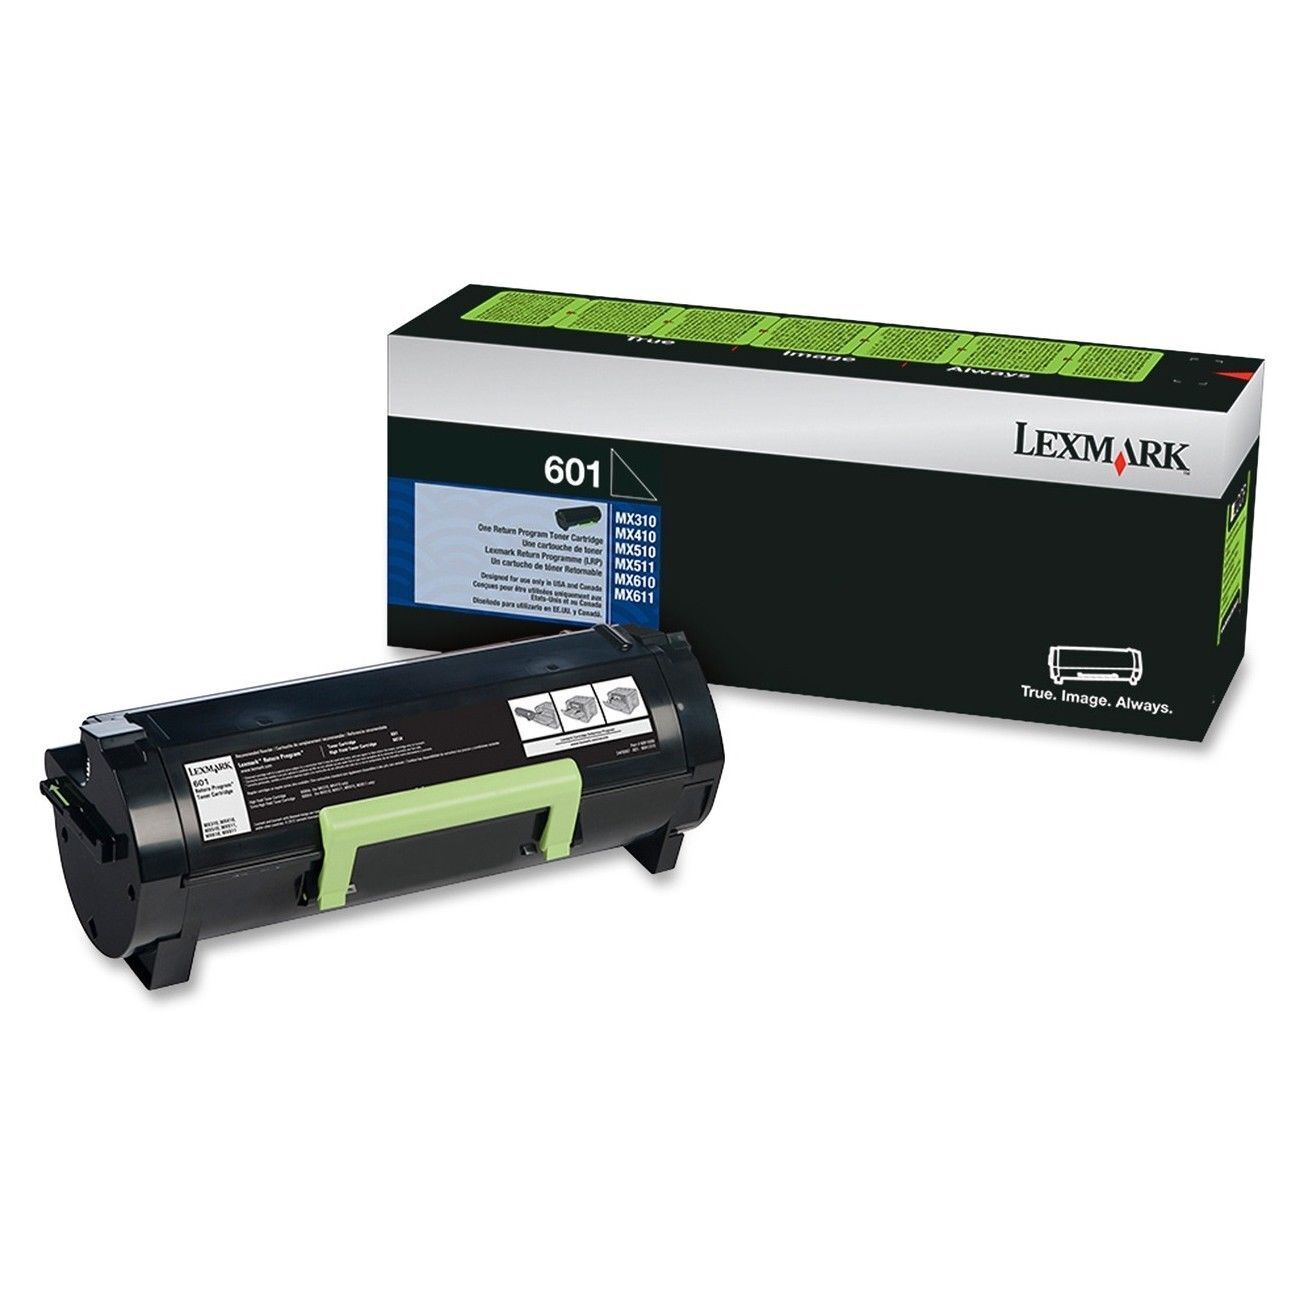 Genuine Lexmark MX410 Black Toner Cartridge 60F1000